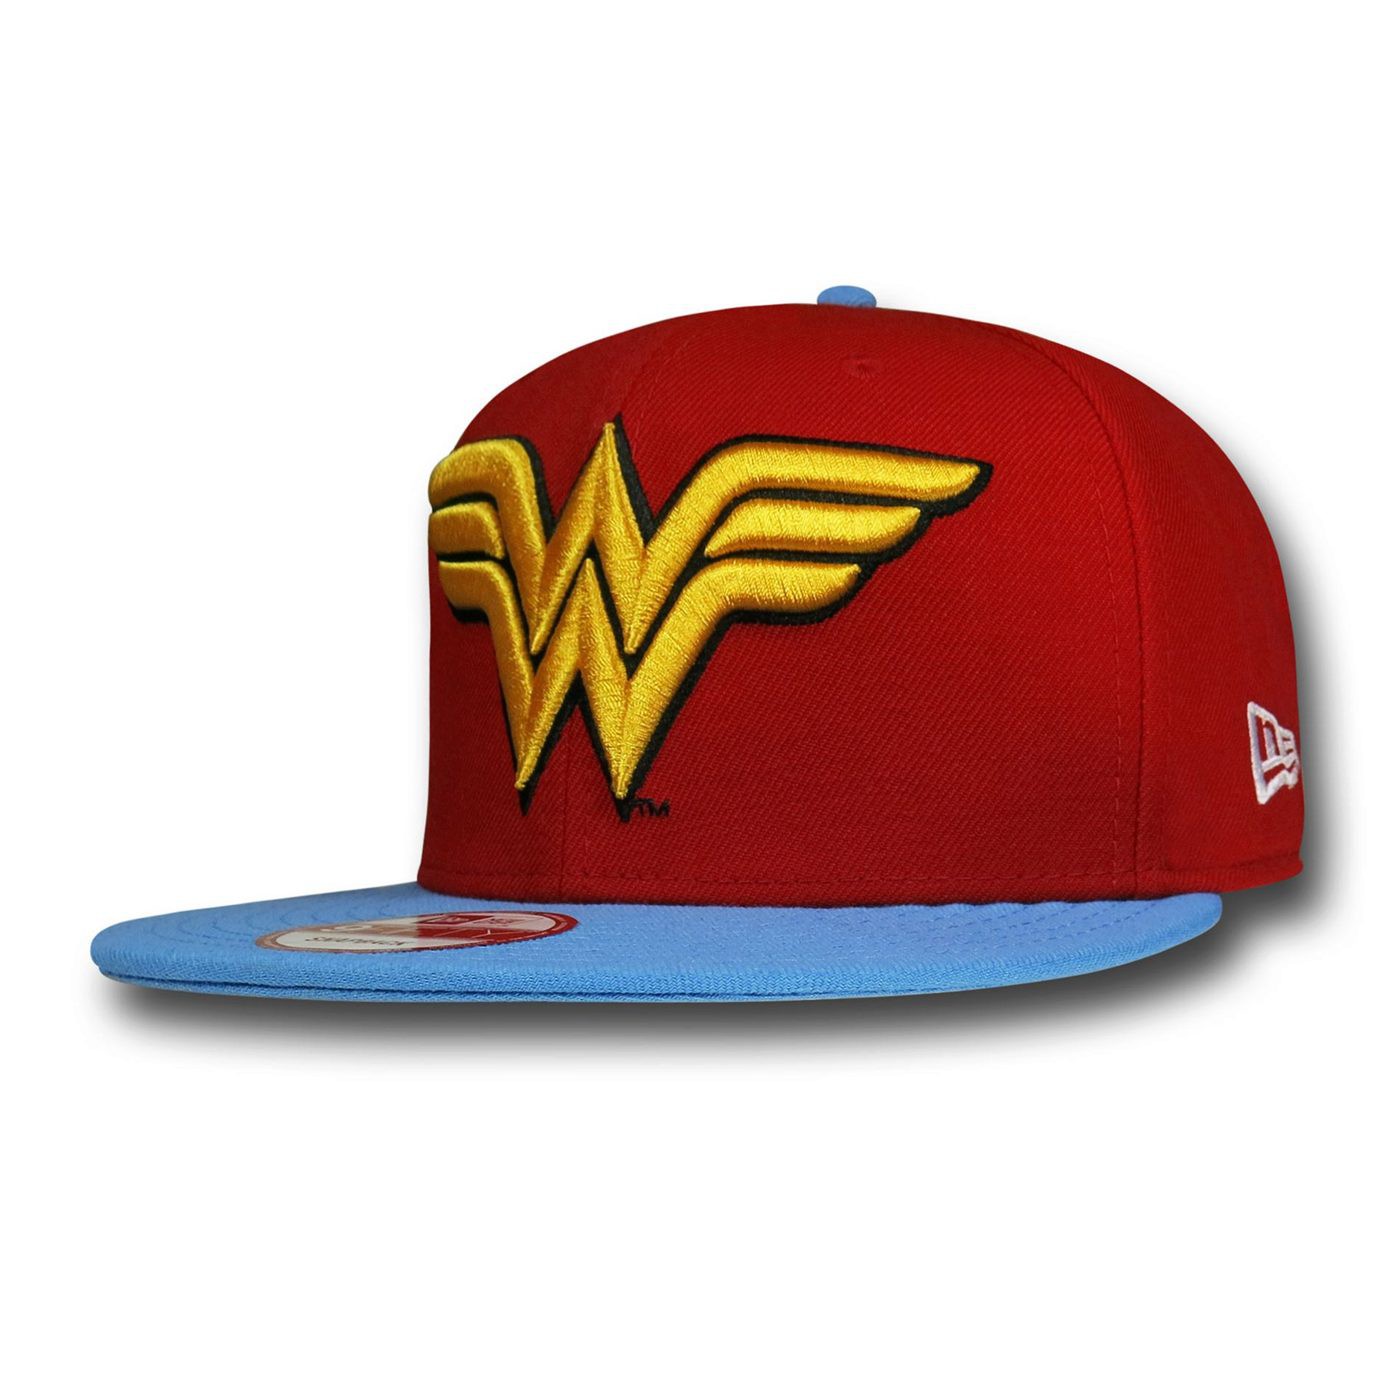 Wonder Woman Symbol 9Fifty Cap